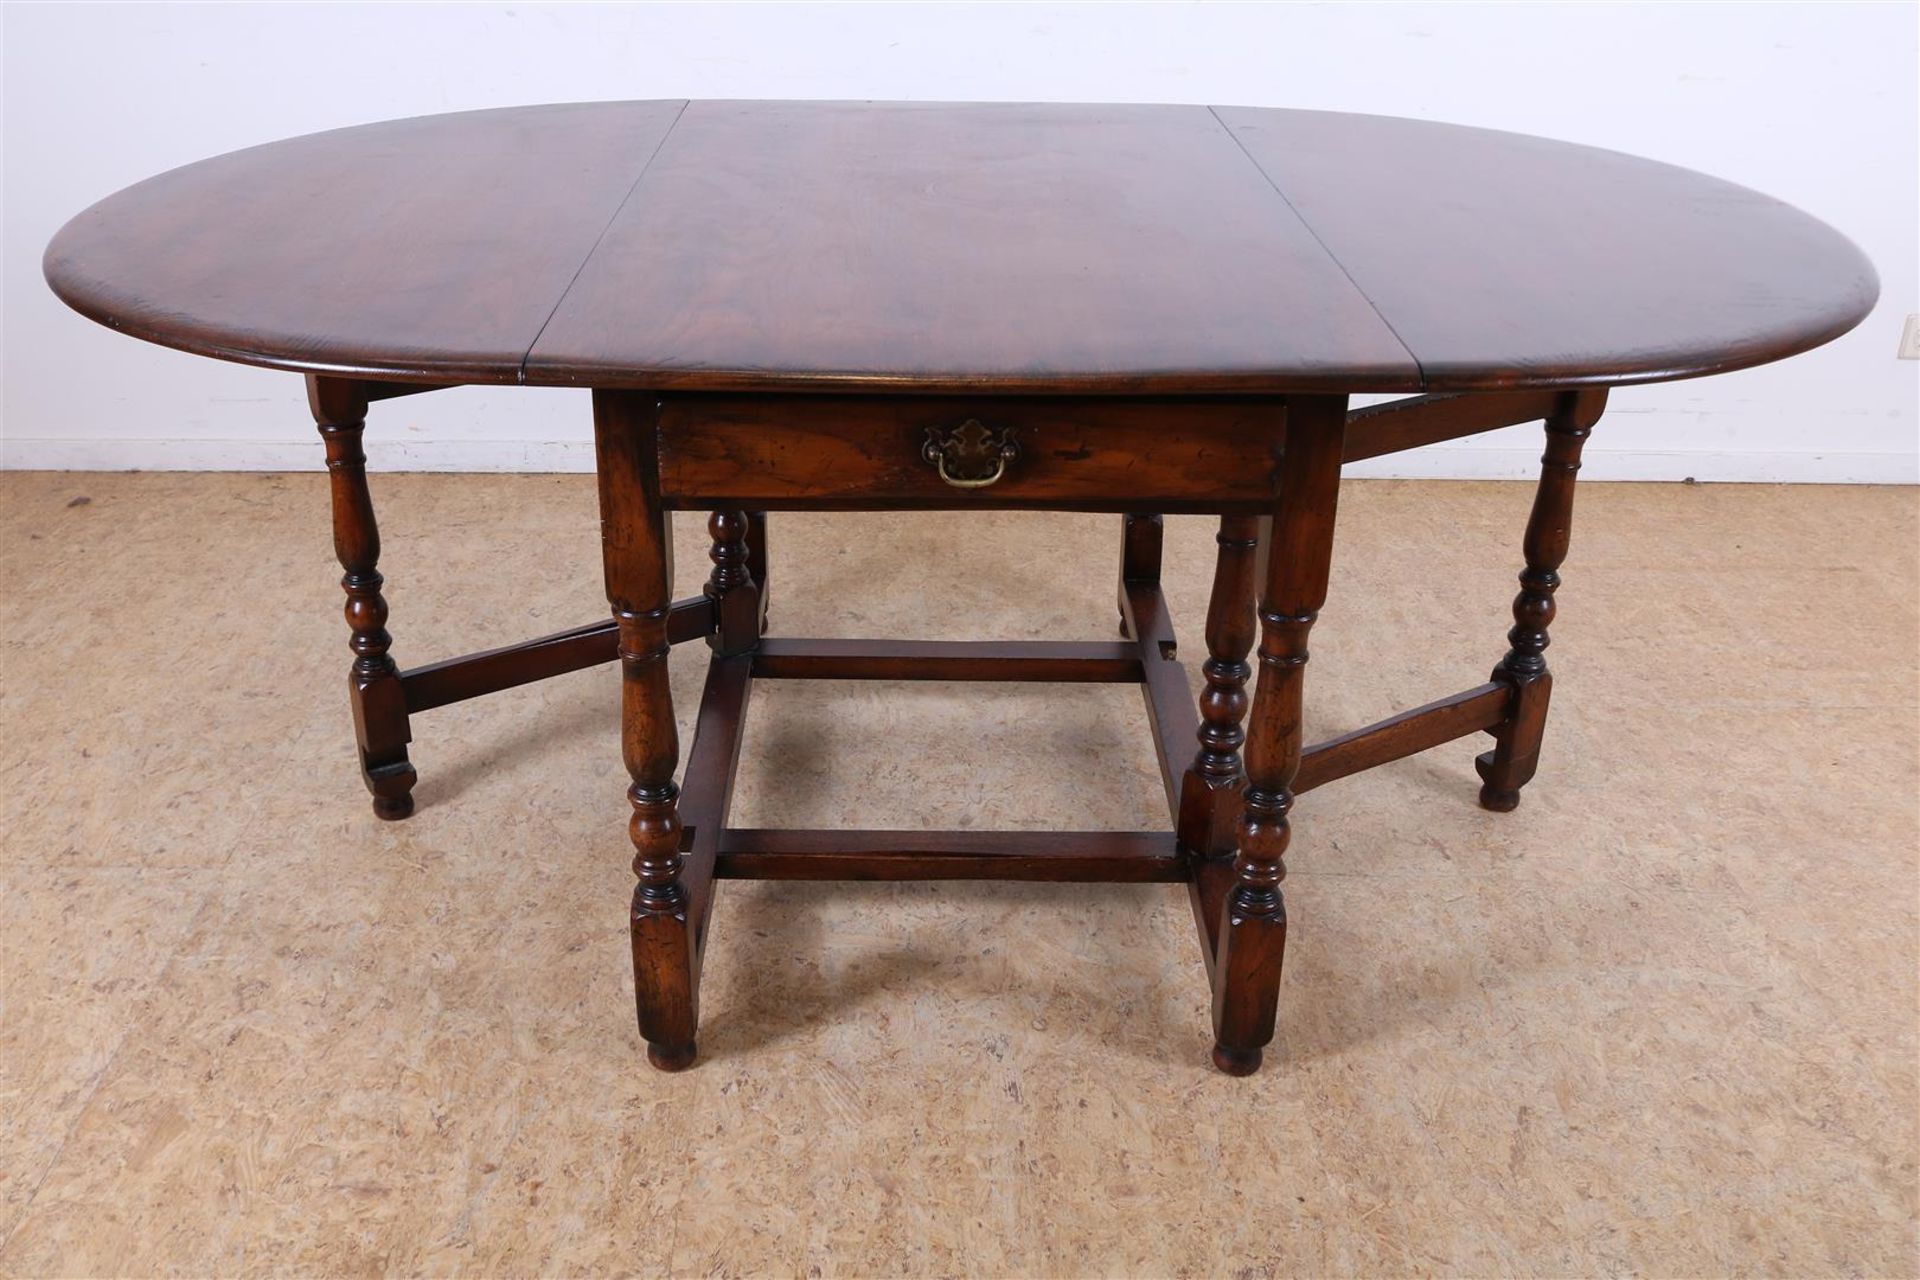 Oak gateleg table with drawer